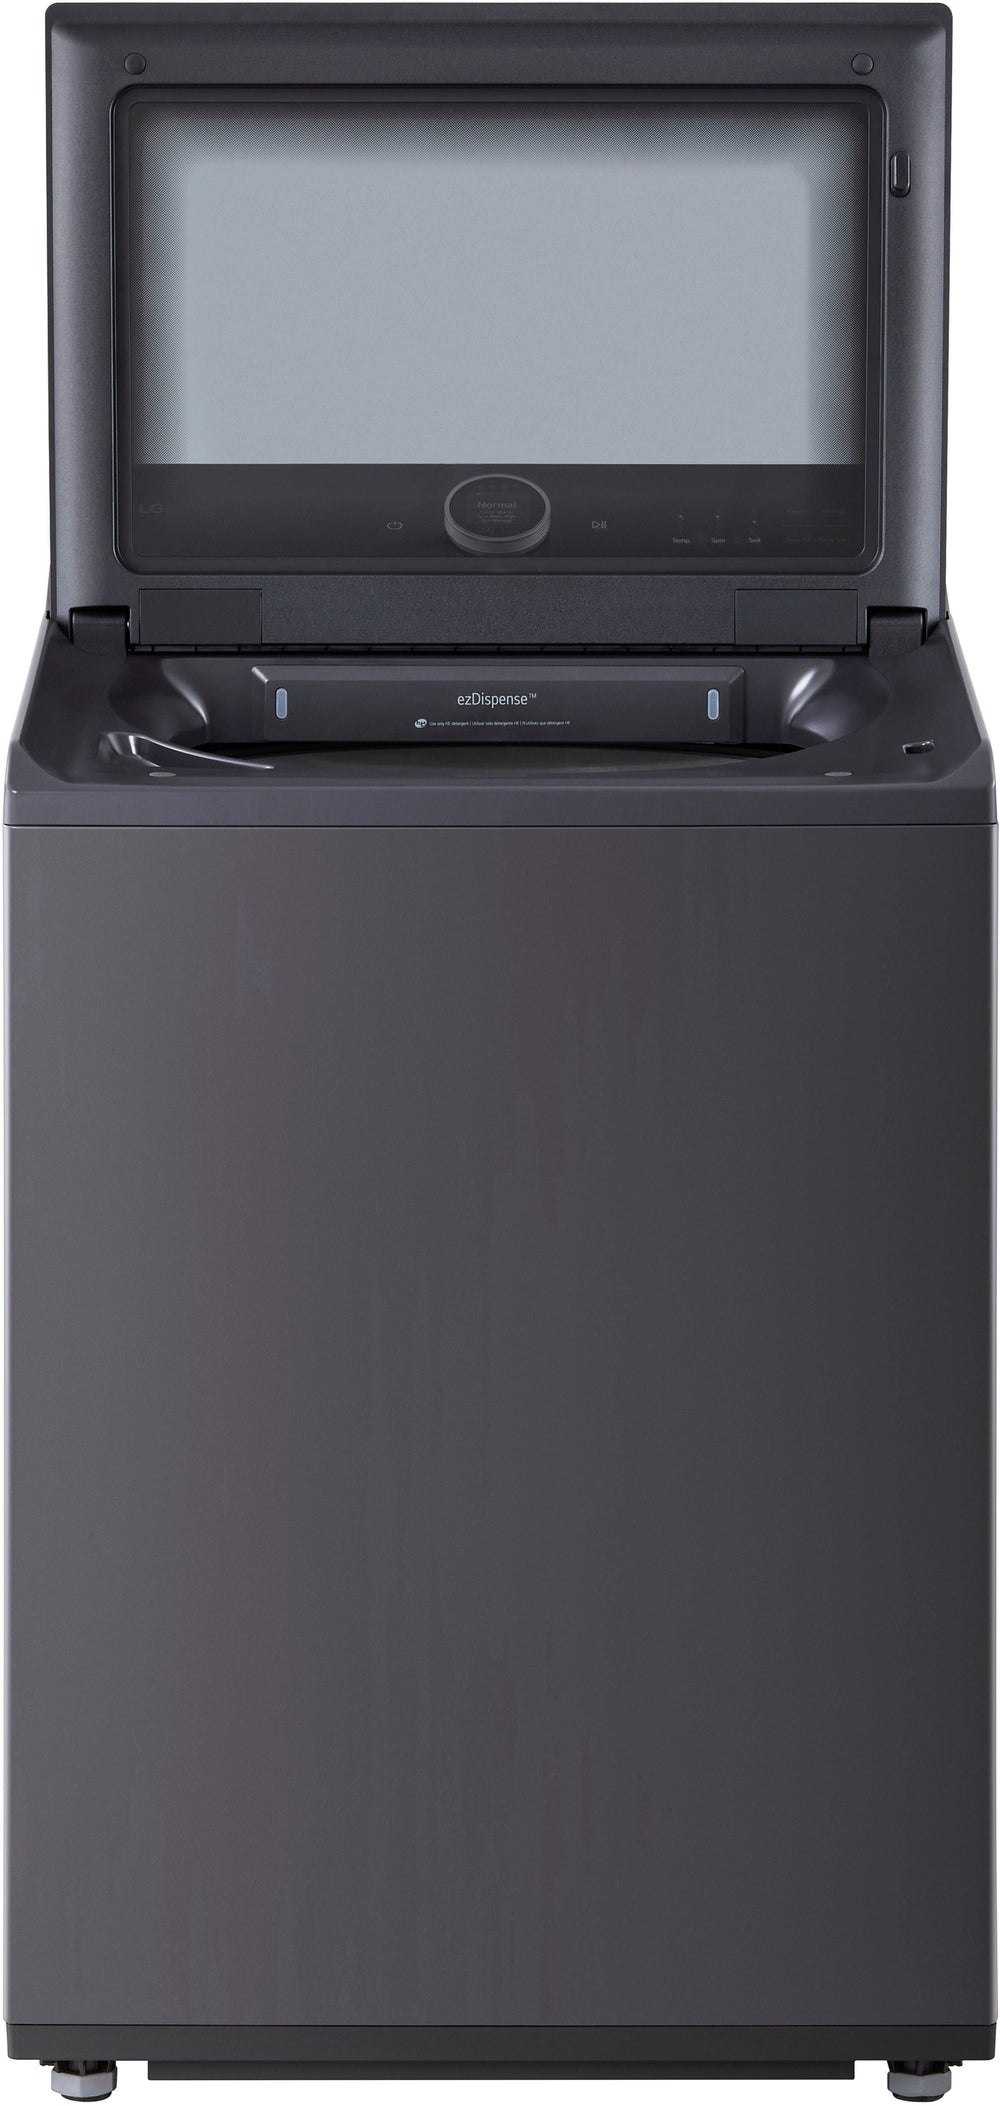 LG - 5.5 Cu. Ft. High Efficiency Smart Top Load Washer with EasyUnload - Matte Black_1